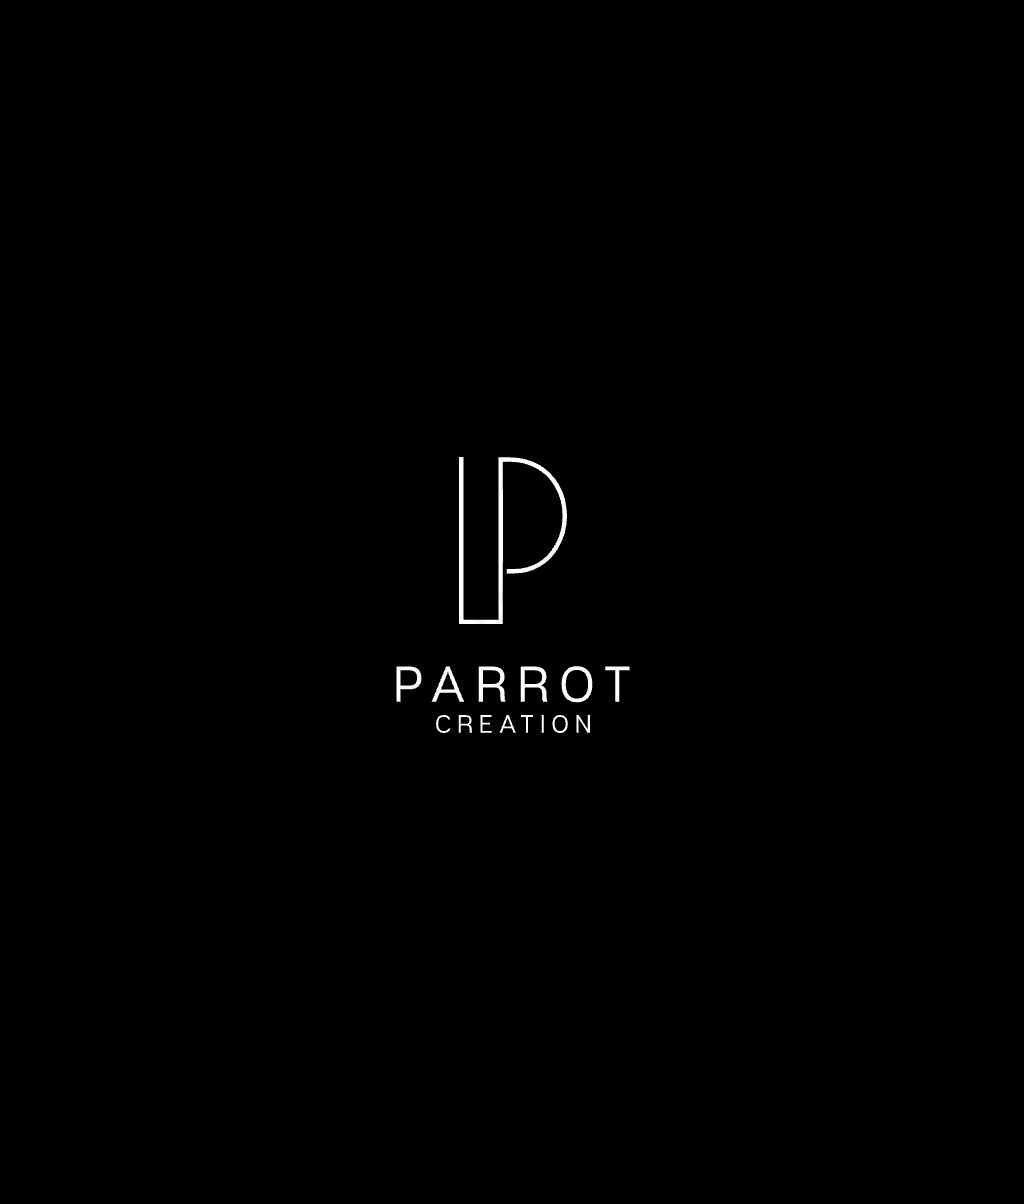 Parrot Creation